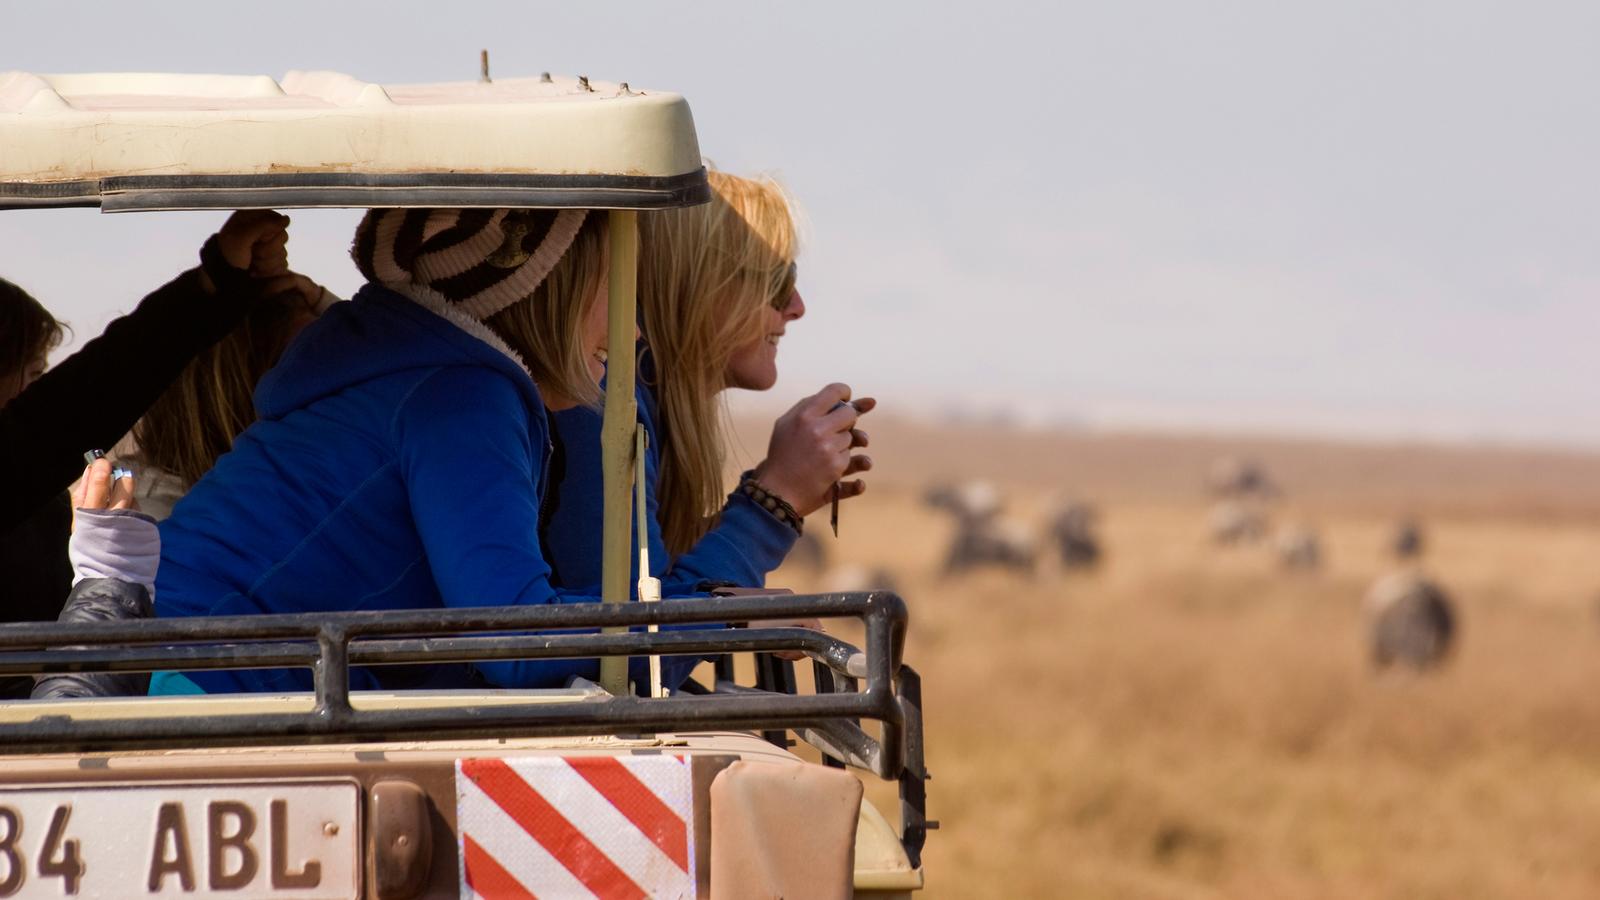 Ultimate East Africa: Mountains & the Masai Mara